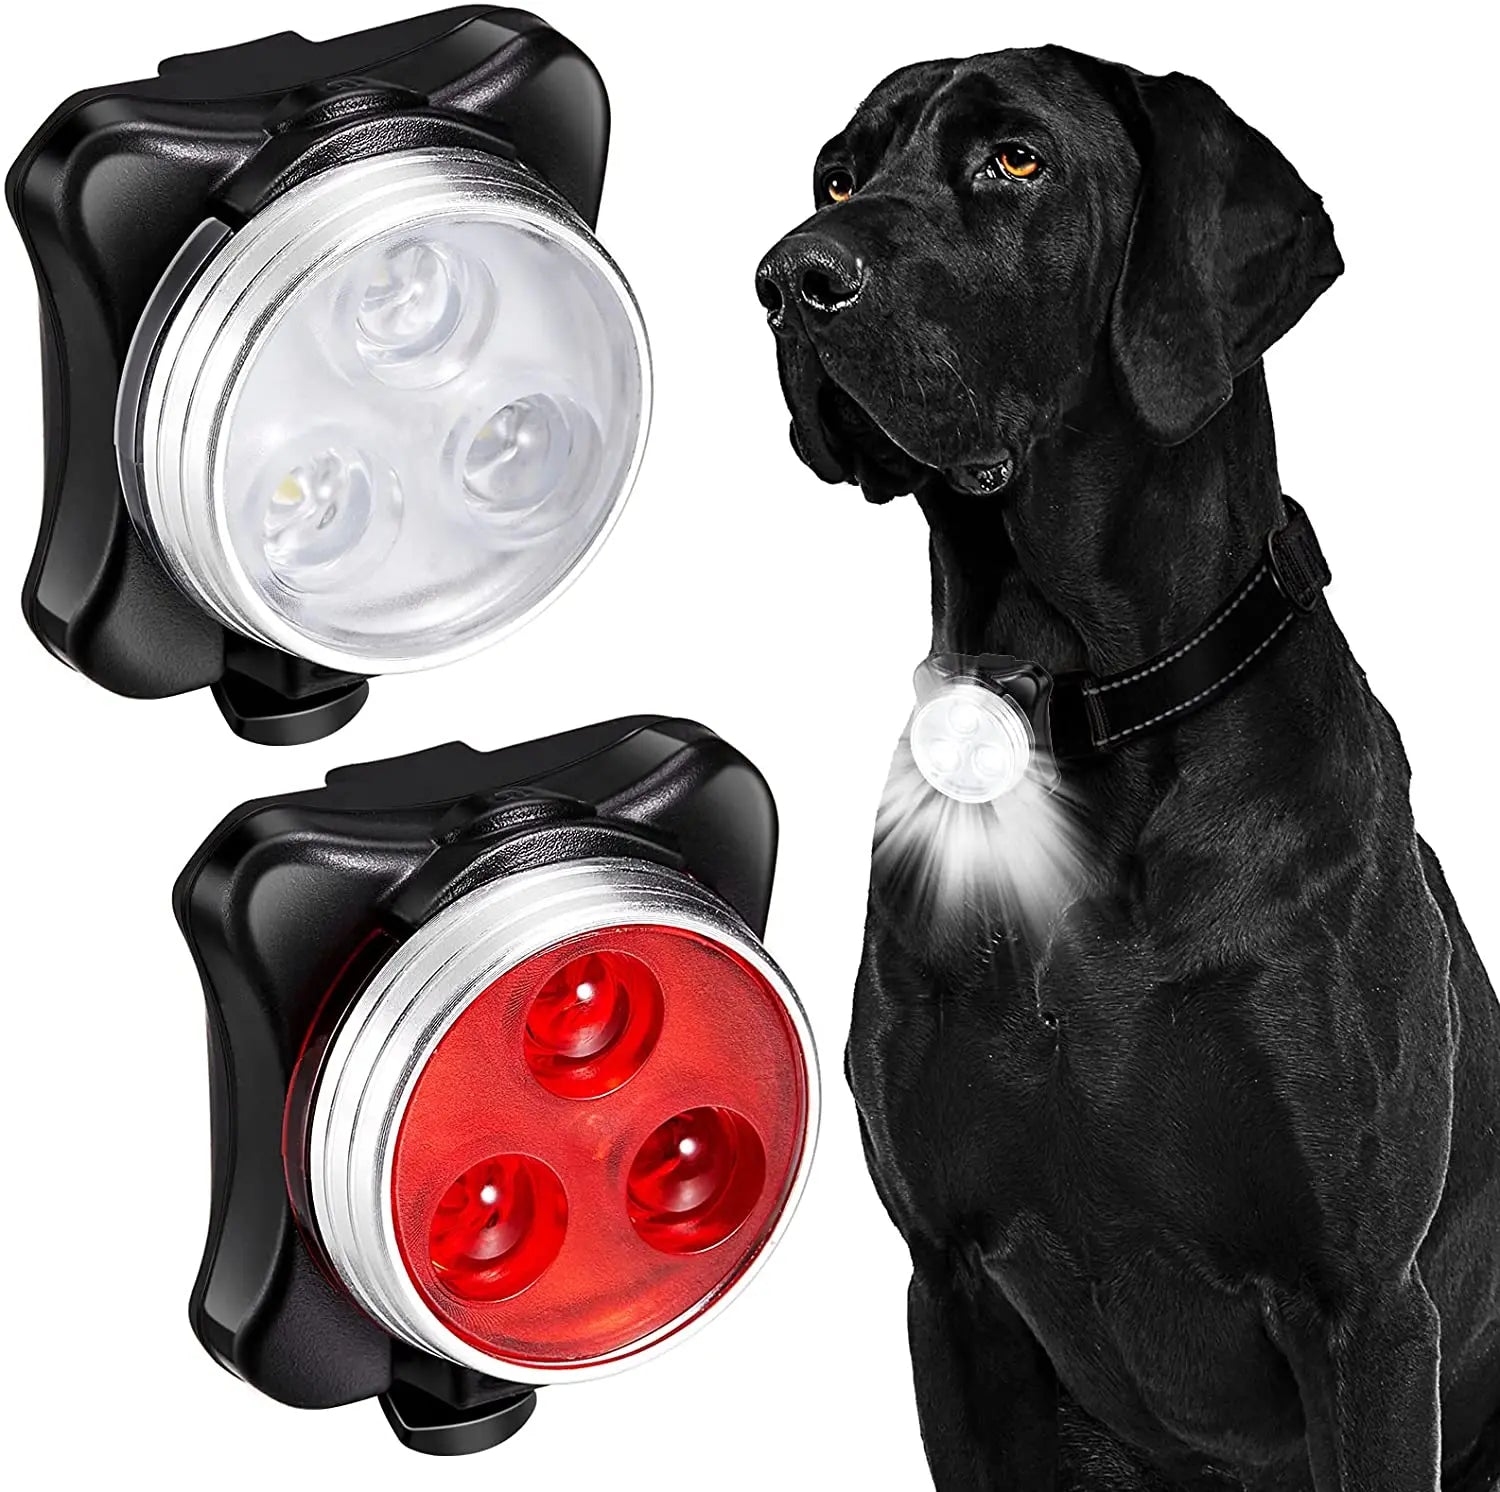 LED Dog Collar Safety Lights: Illuminate Night Adventures  ourlum.com   